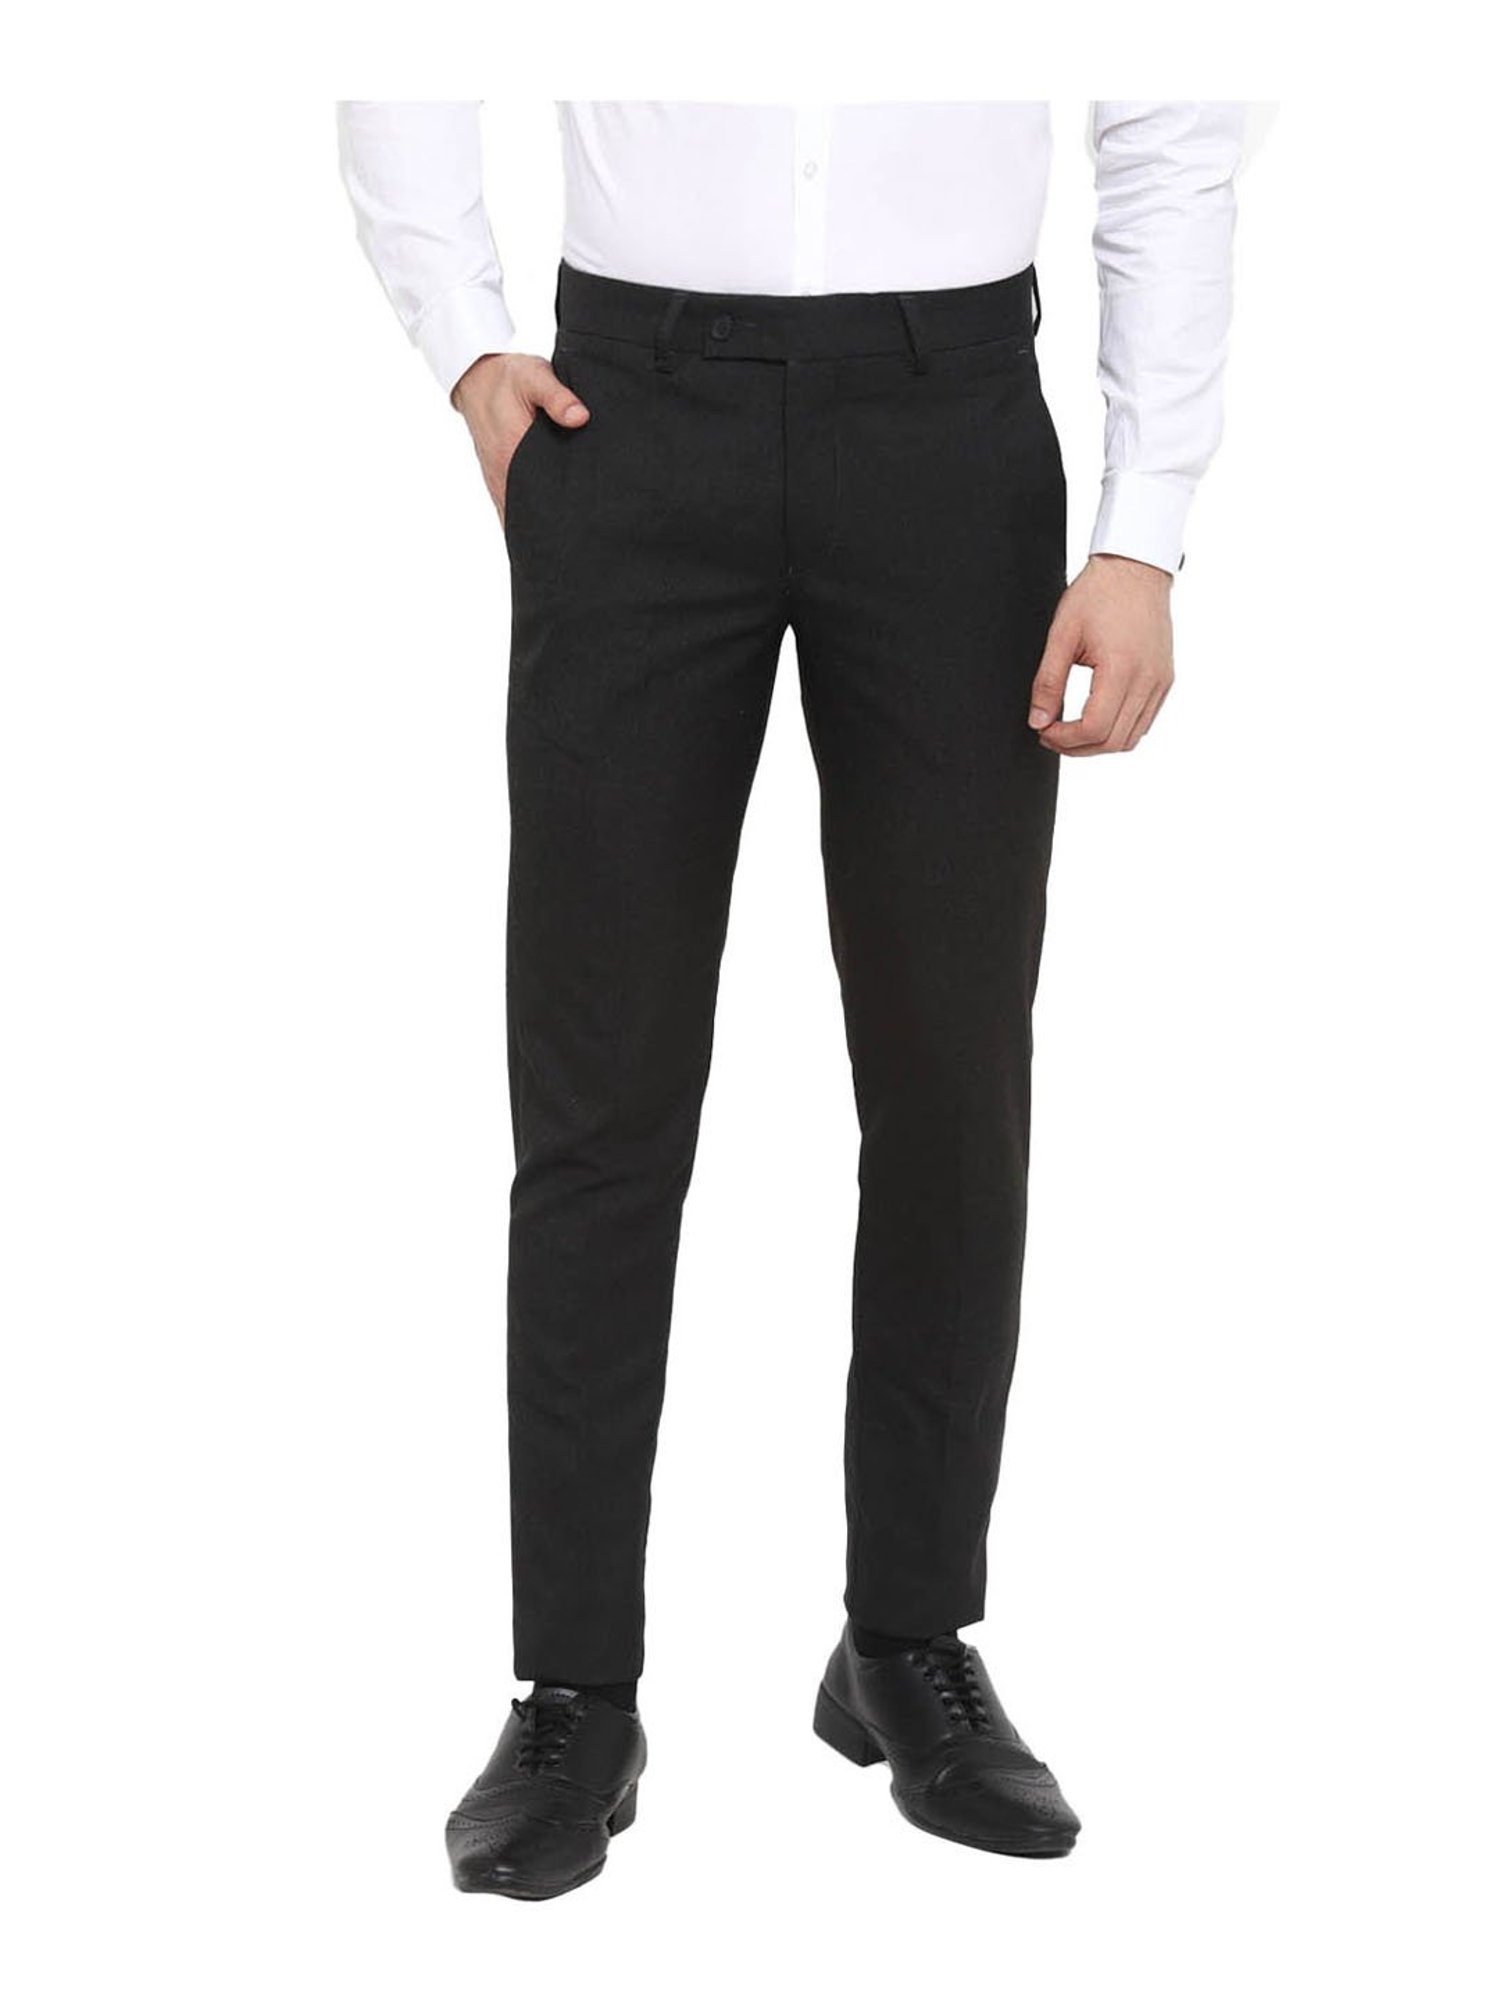 Buy Black Trousers  Pants for Men by TURTLE Online  Ajiocom